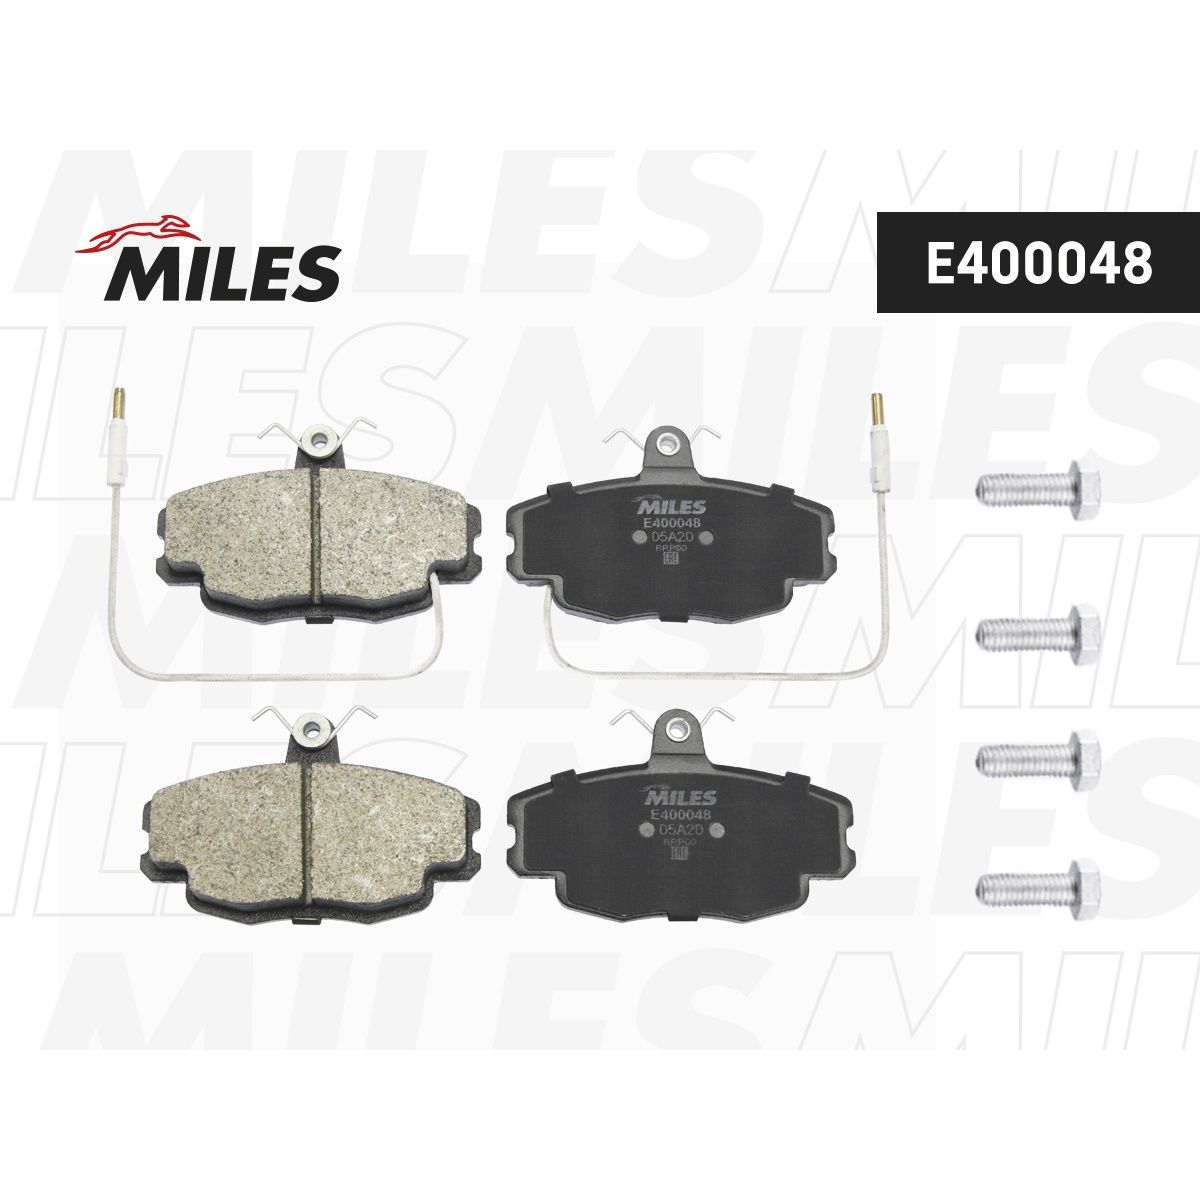 Комплект тормозных колодок Miles e210038 для Hyundai Accent II, III. Miles db44006. Miles e400048.